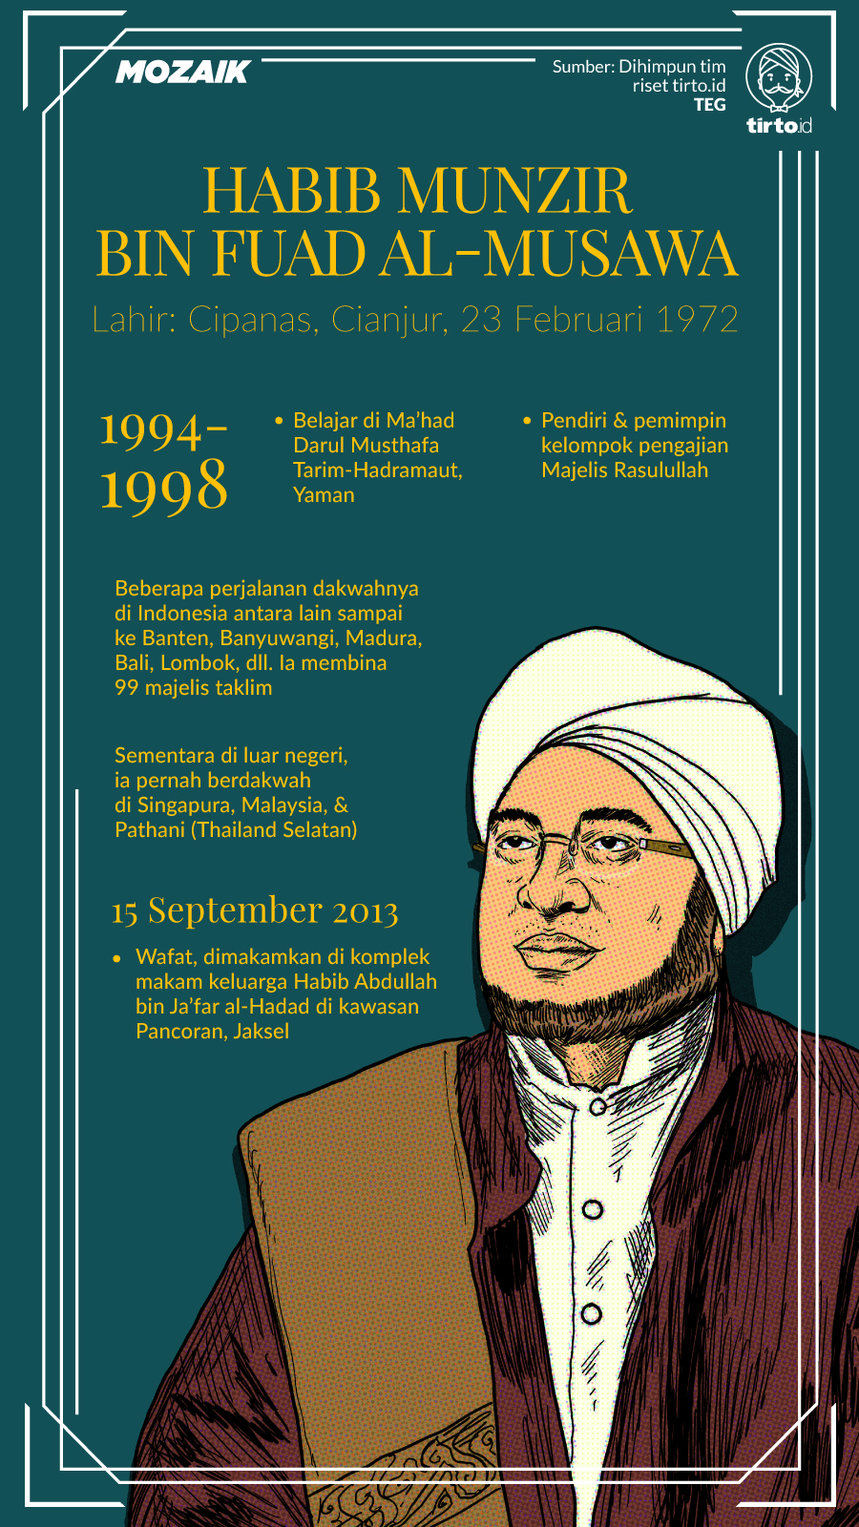 Infografik Mozaik Habib Munzir bin Fuad al-musawa